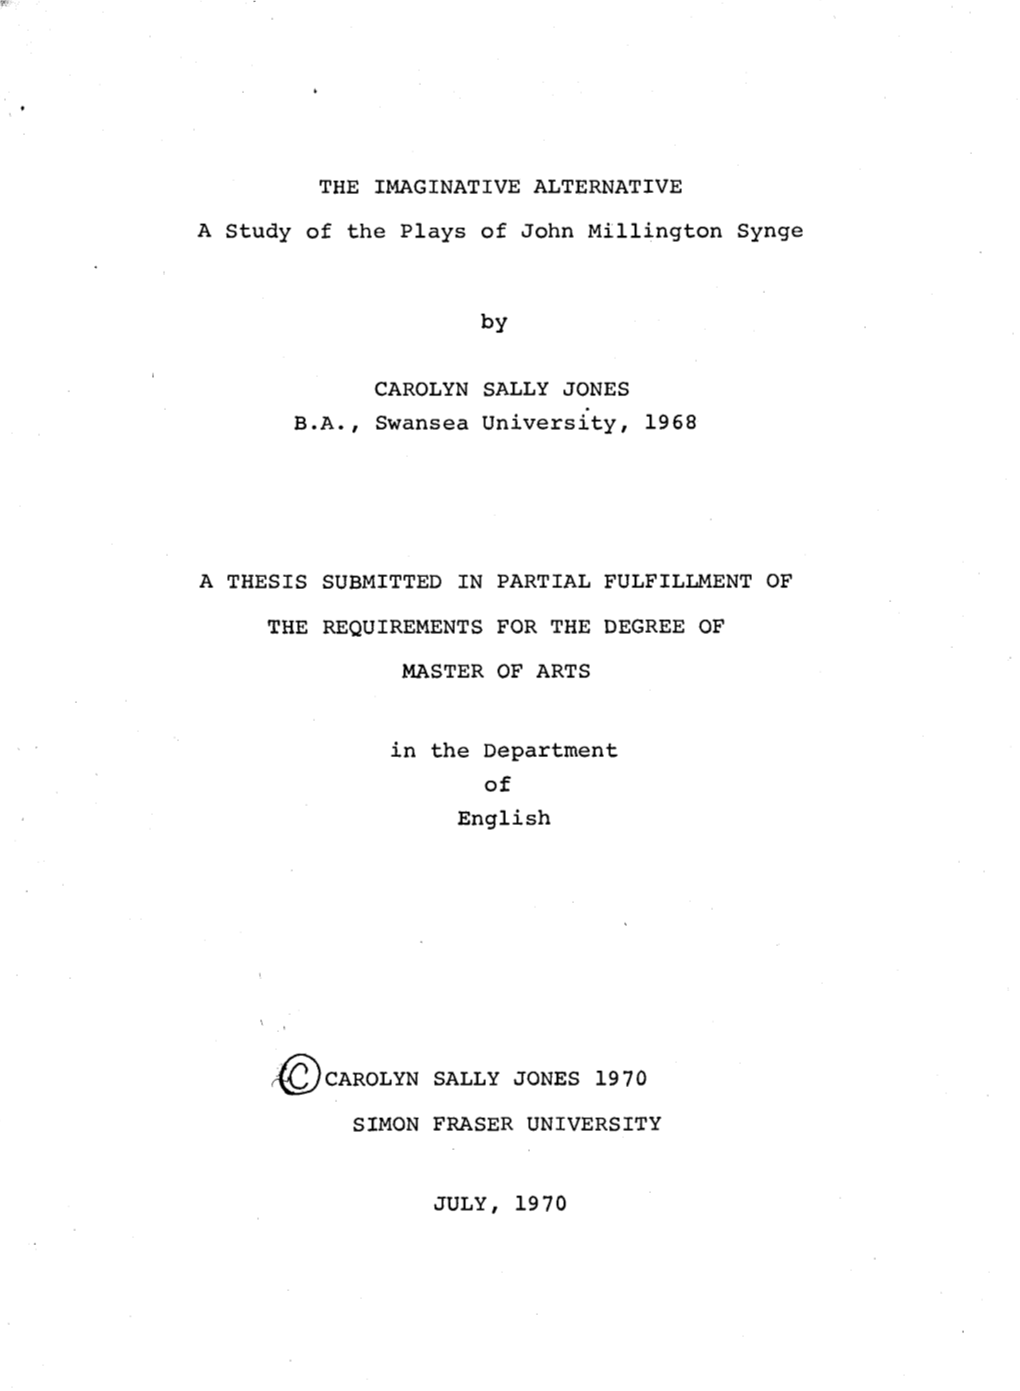 The Imaginative Alternative : a Study of the Plays of John Millington Synge